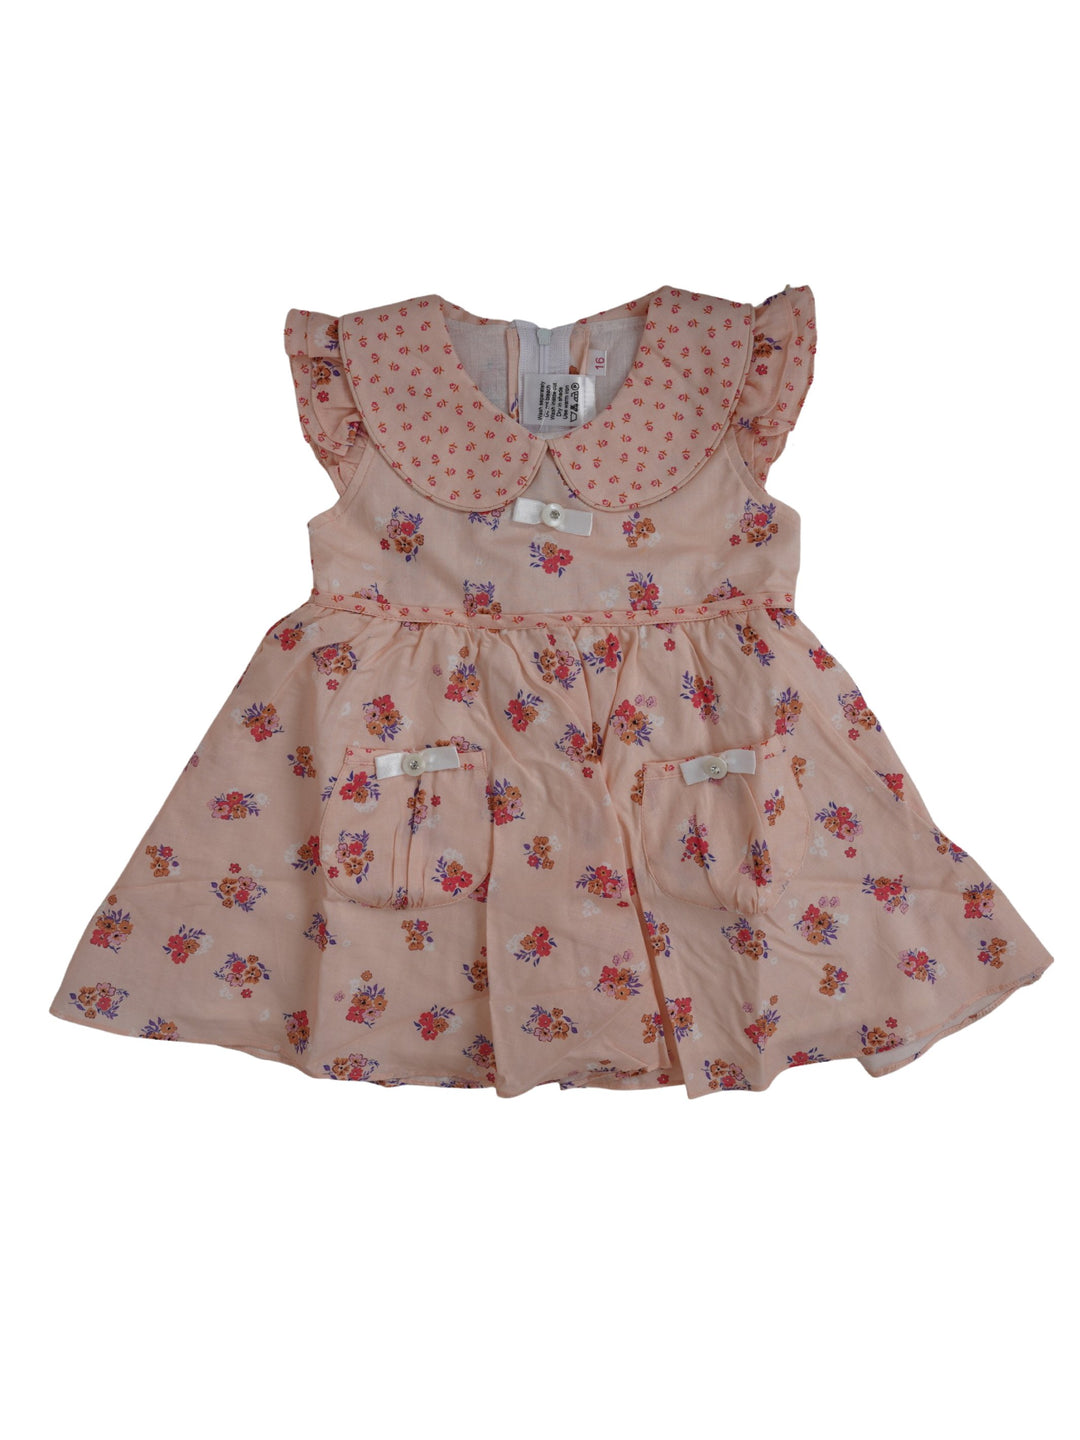 The Nesavu Baby Frock / Jhabla Pocket Dress For Your Lil Girls With Peter Pan Collar psr silks Nesavu 14 (6M-12M) / Salmon BFJ143A